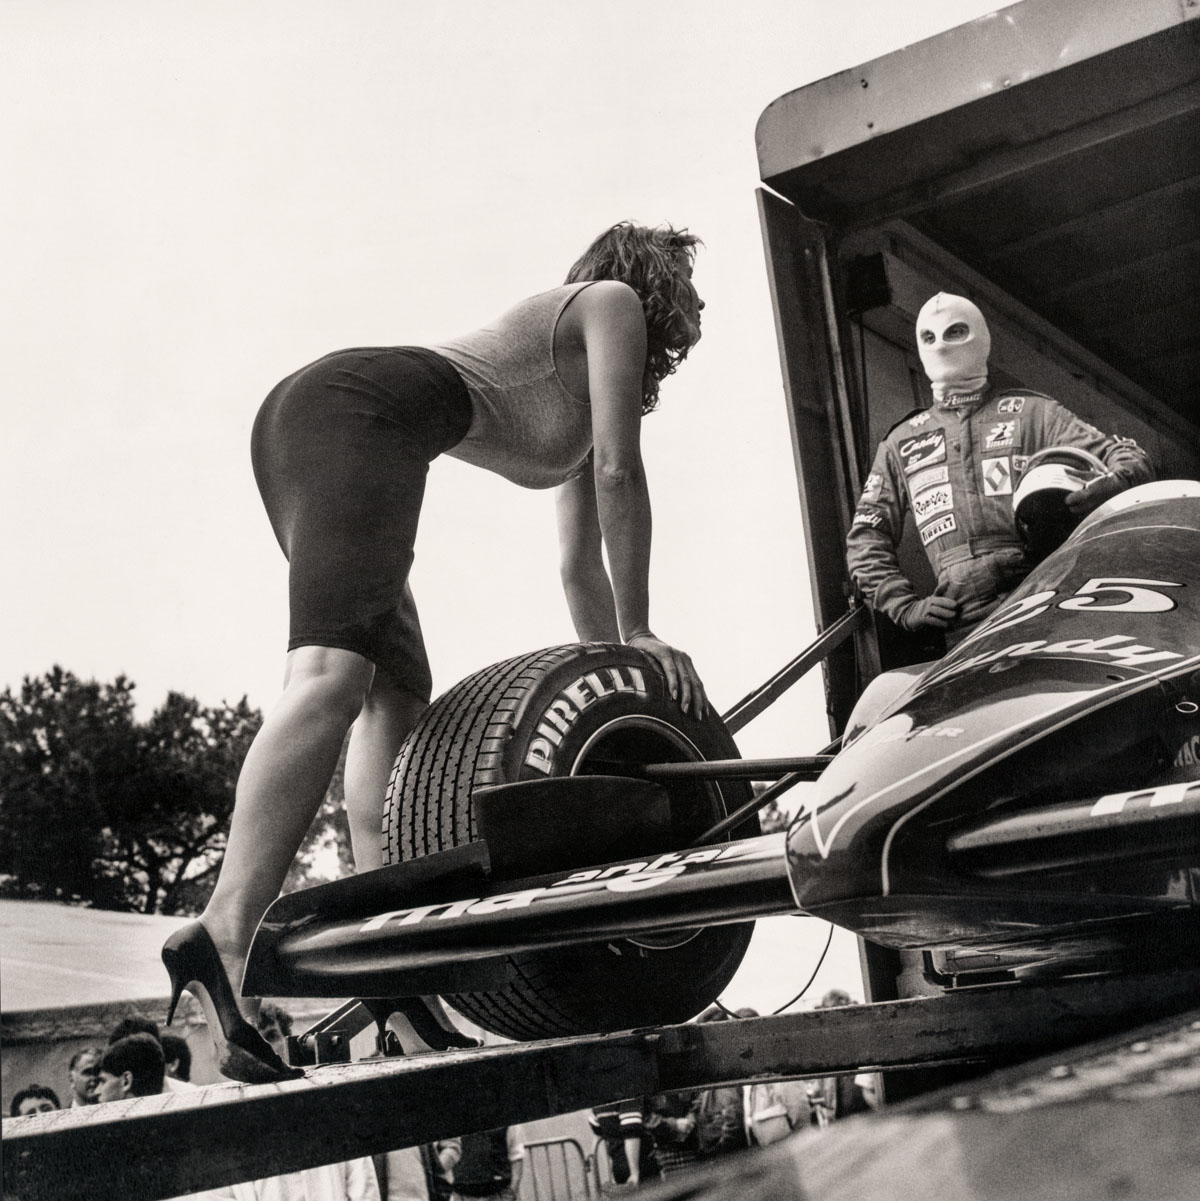 A girl on a tyre. From the Pirelli calendar.